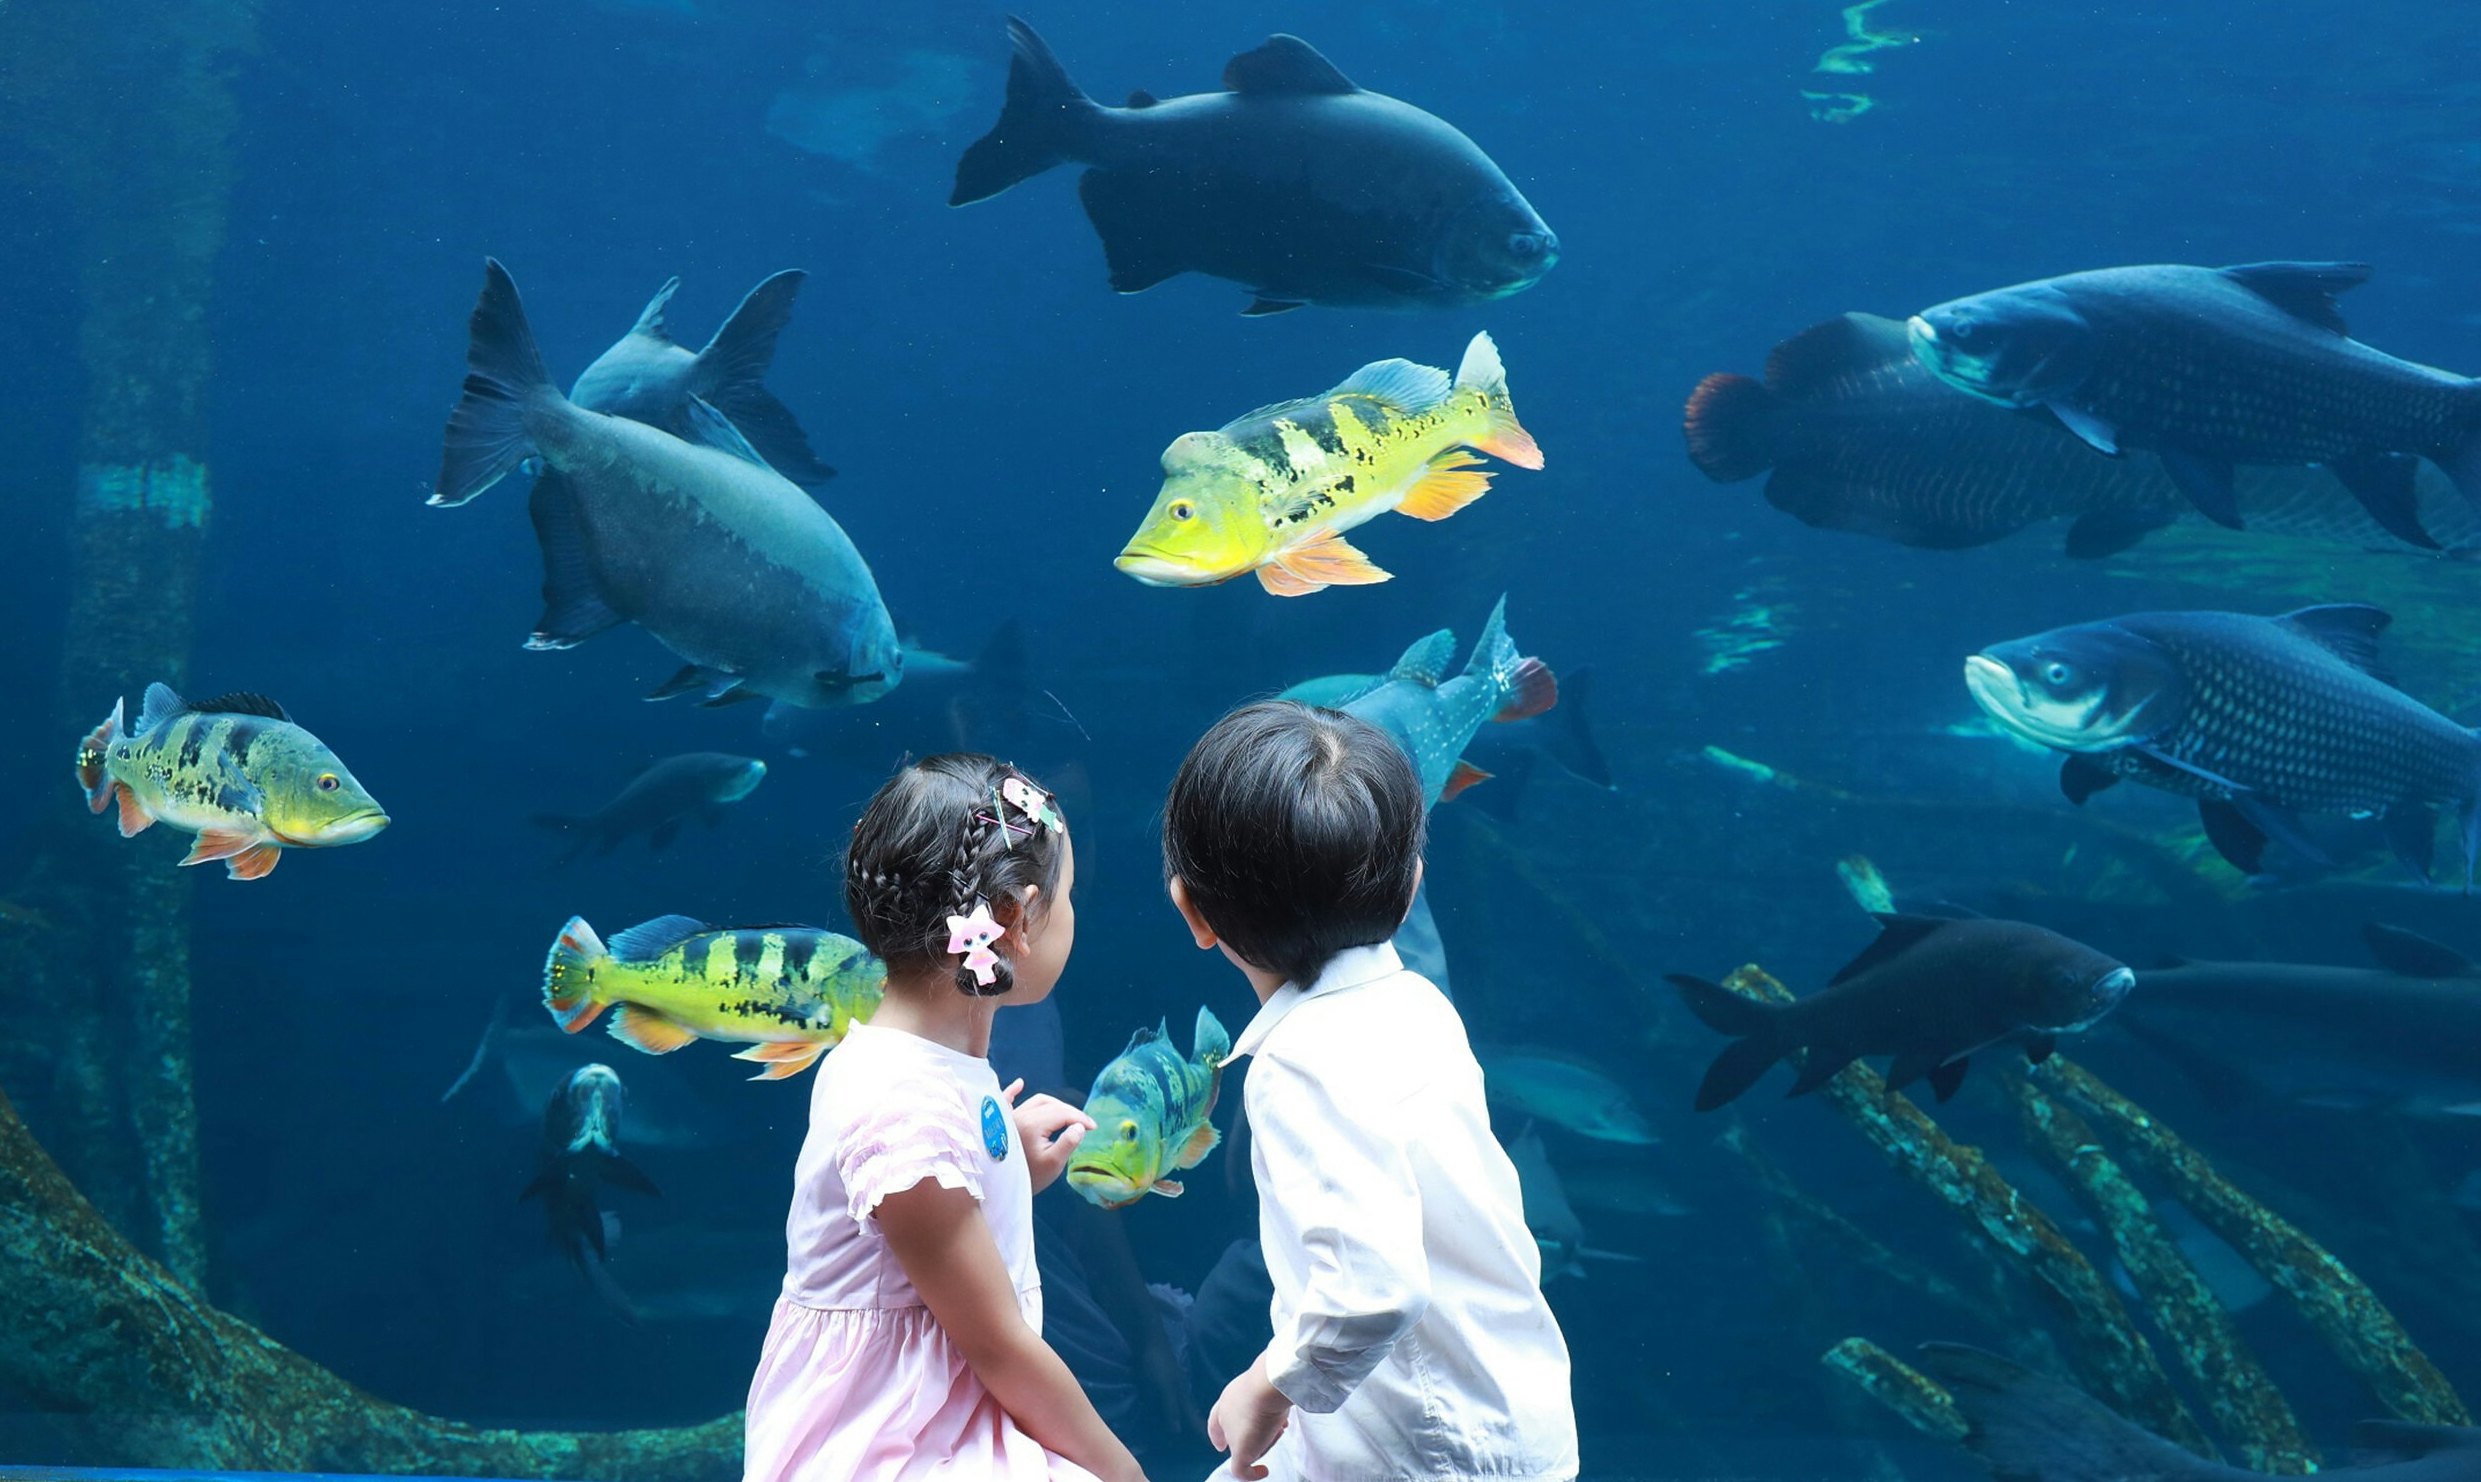 Giant aquarium opens at Central Phuket shopping centre - Inside Retail Asia